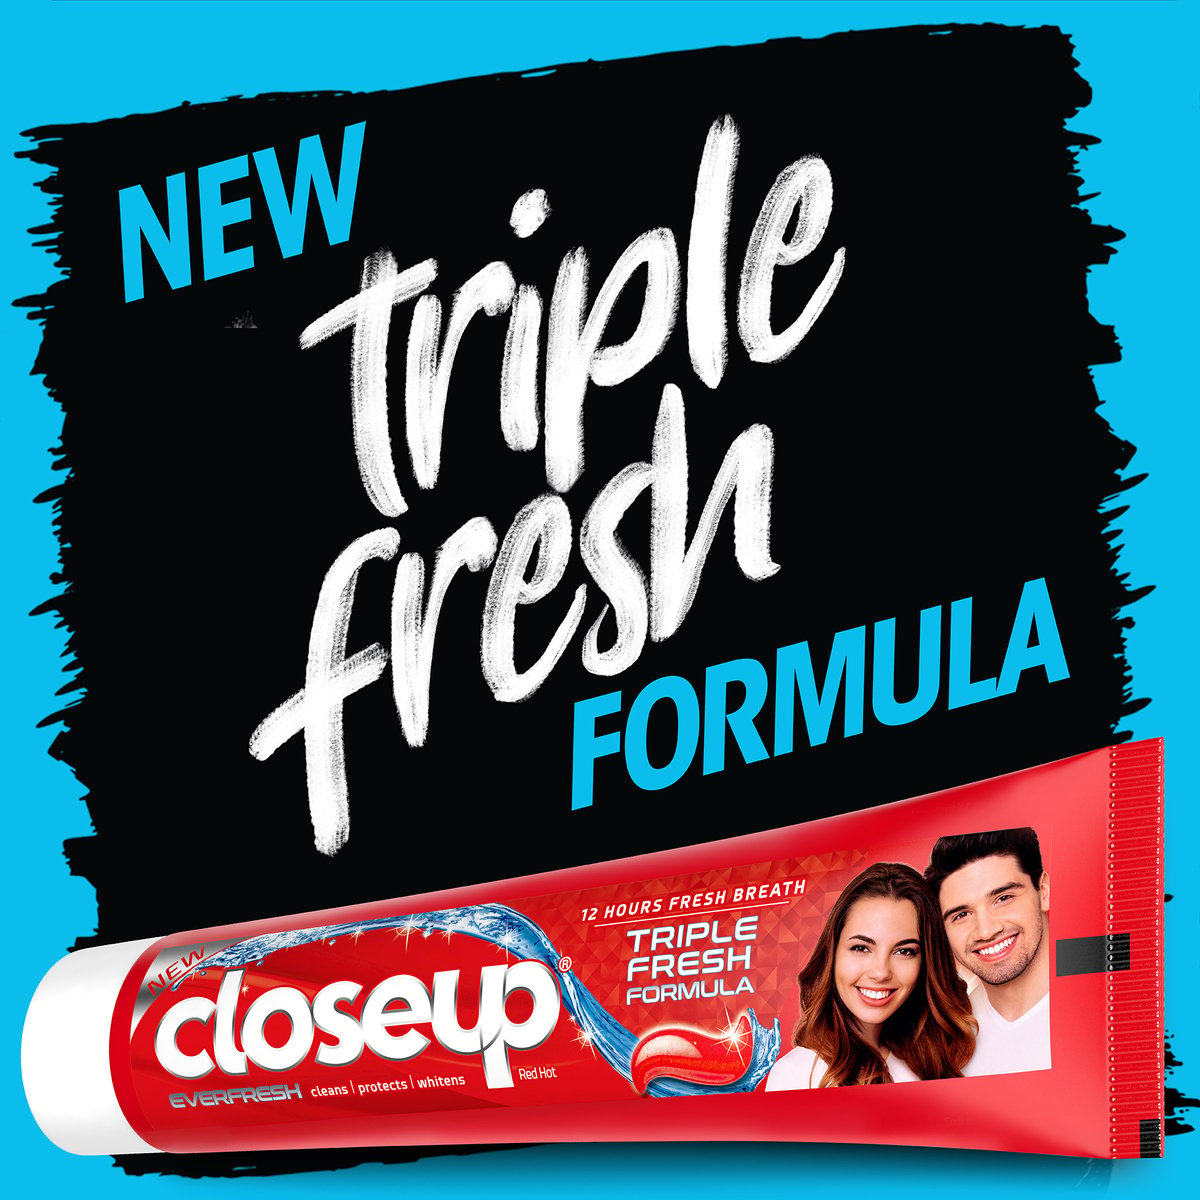 Closeup Triple Fresh Formula Gel Toothpaste Red Hot 120 ml